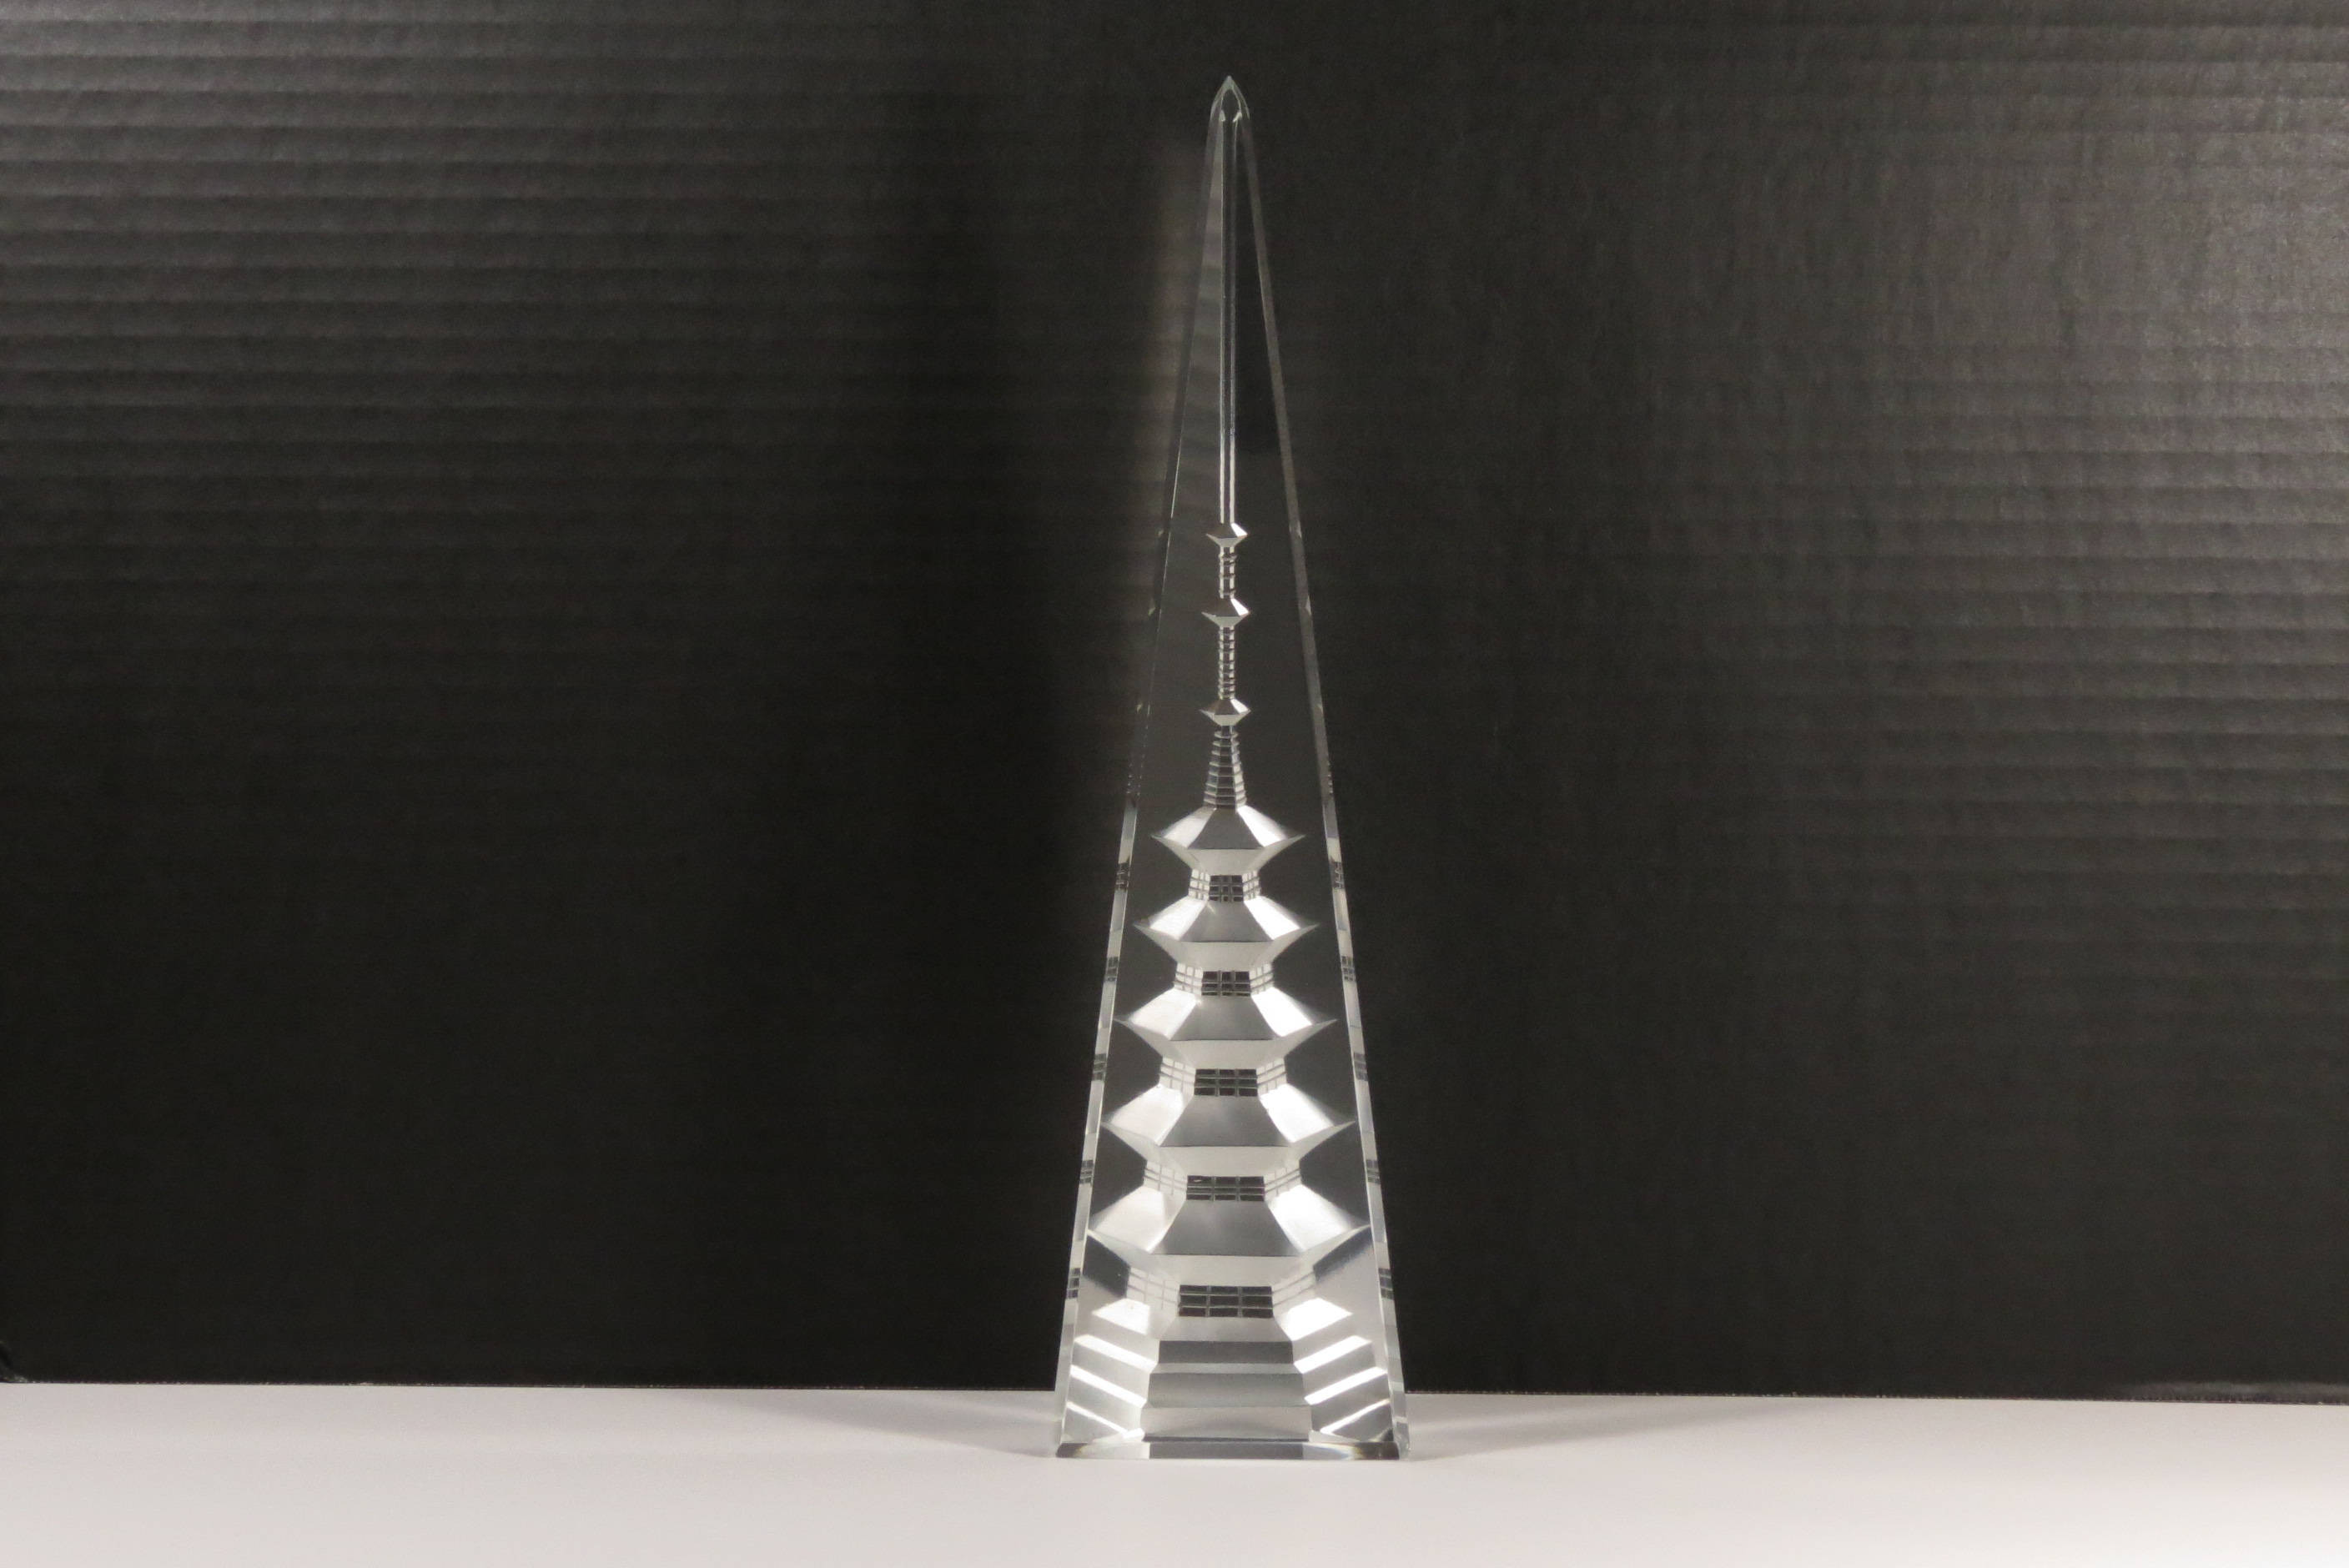 28 Spectacular Lead Crystal Cut Glass Vase 2022 free download lead crystal cut glass vase of vintage hoya lead crystal reverse cut art glass pagoda steeple etsy within dc29fc294c28epowiac299ksz